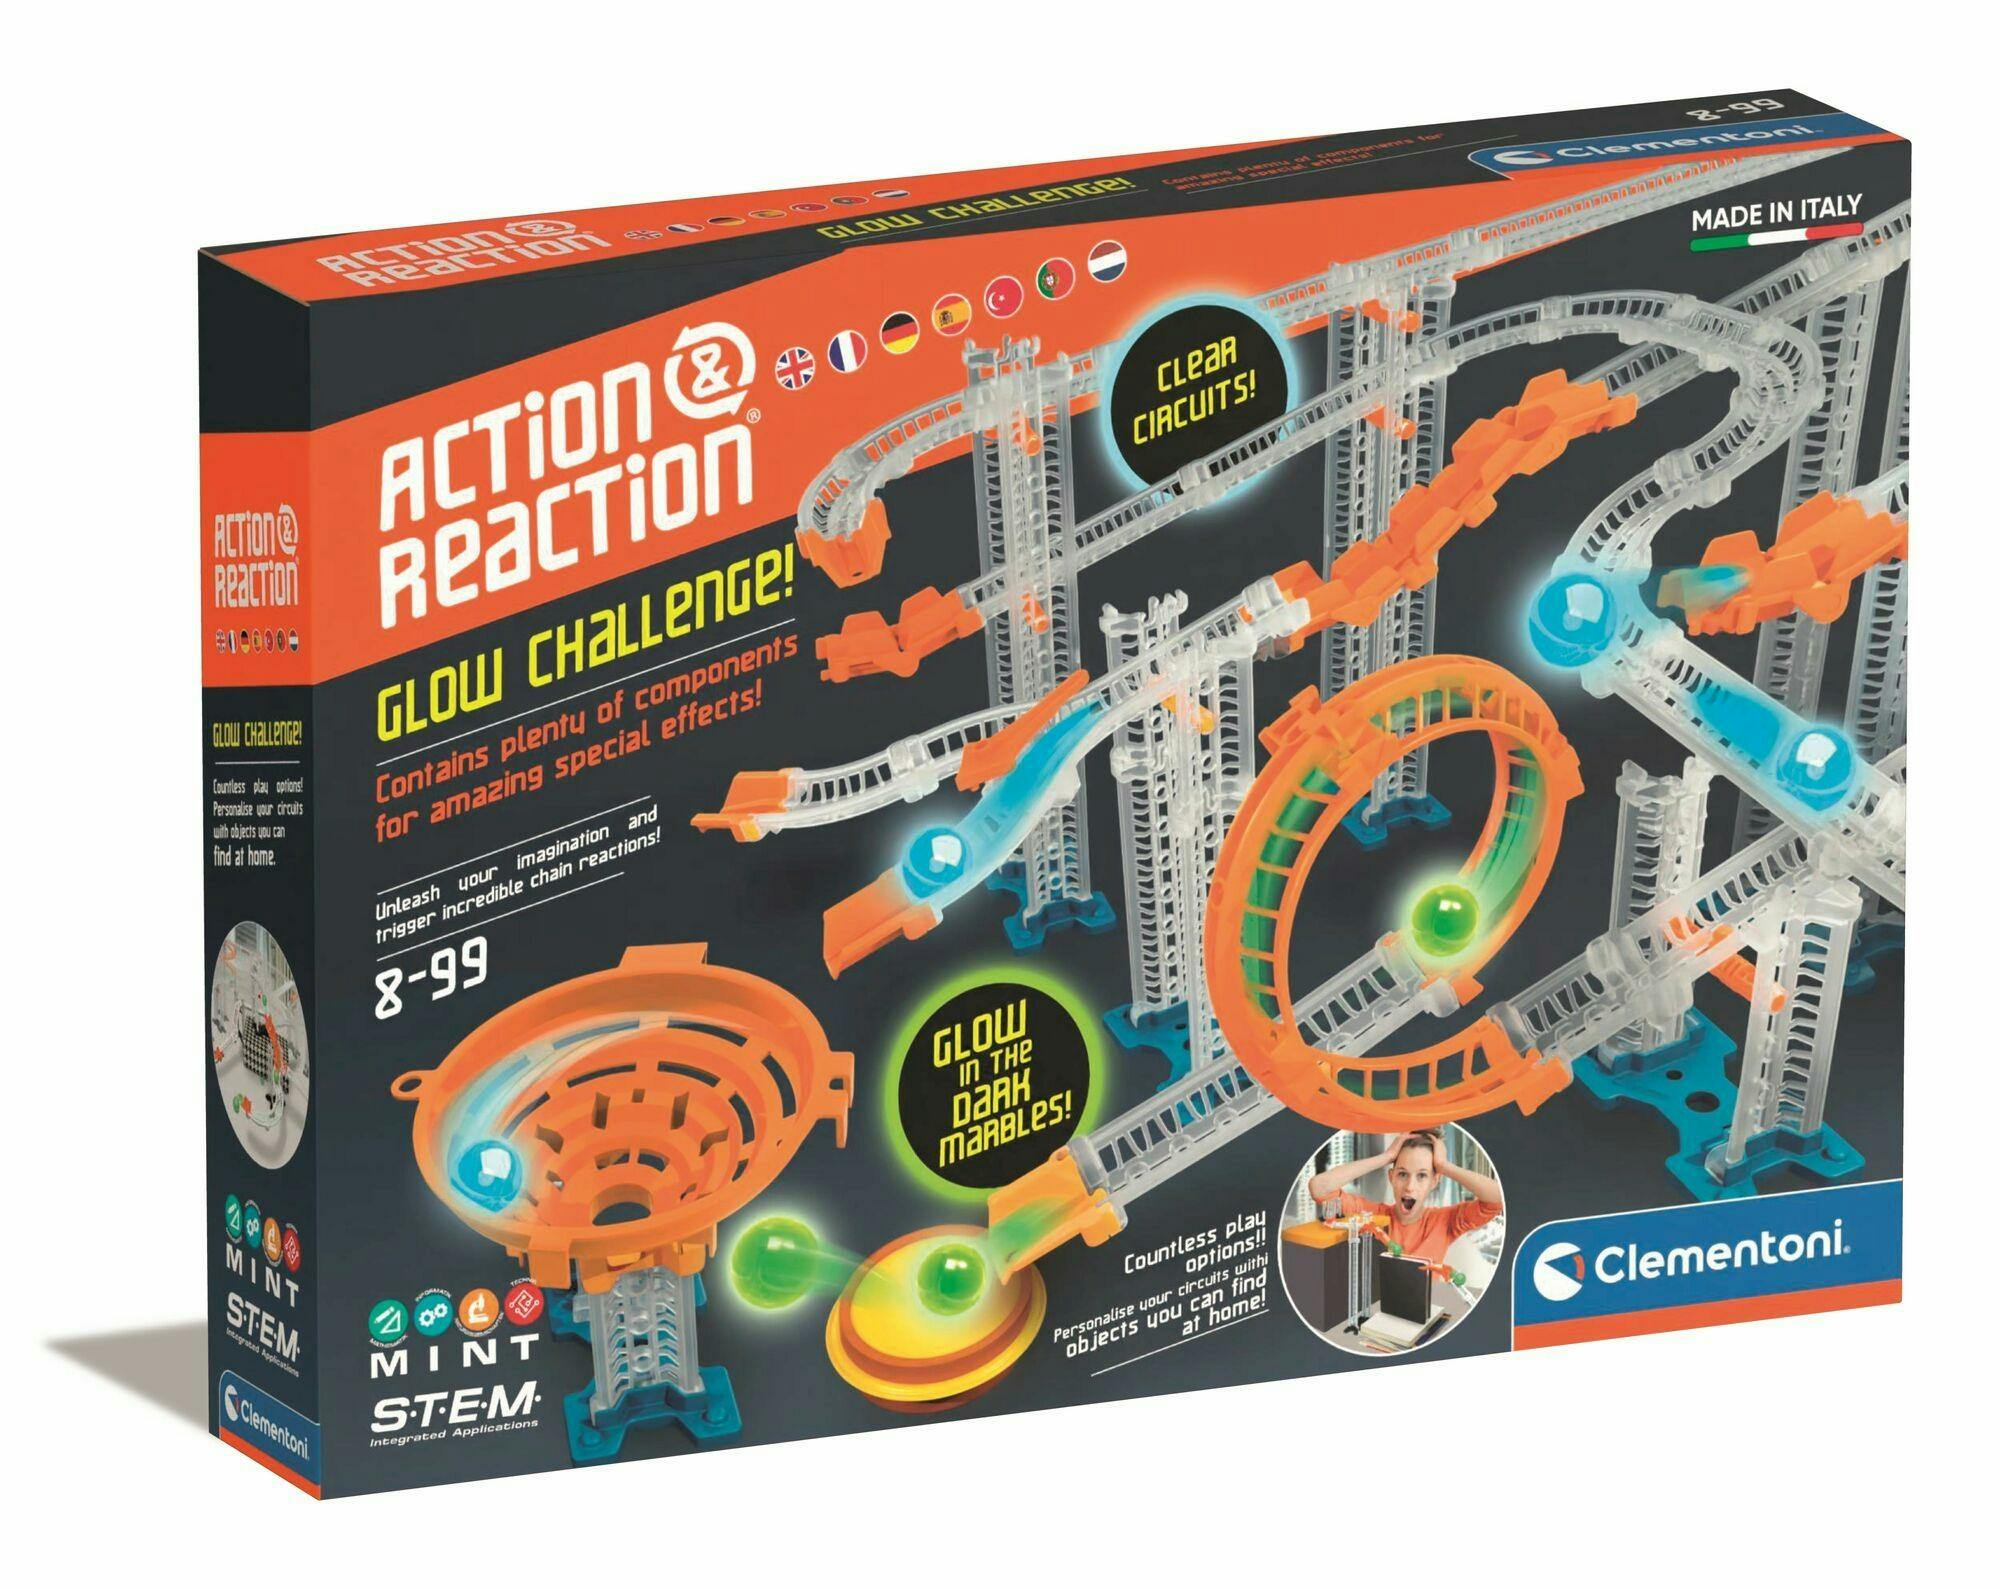 Clementoni Action & Reaction Glow Challenge